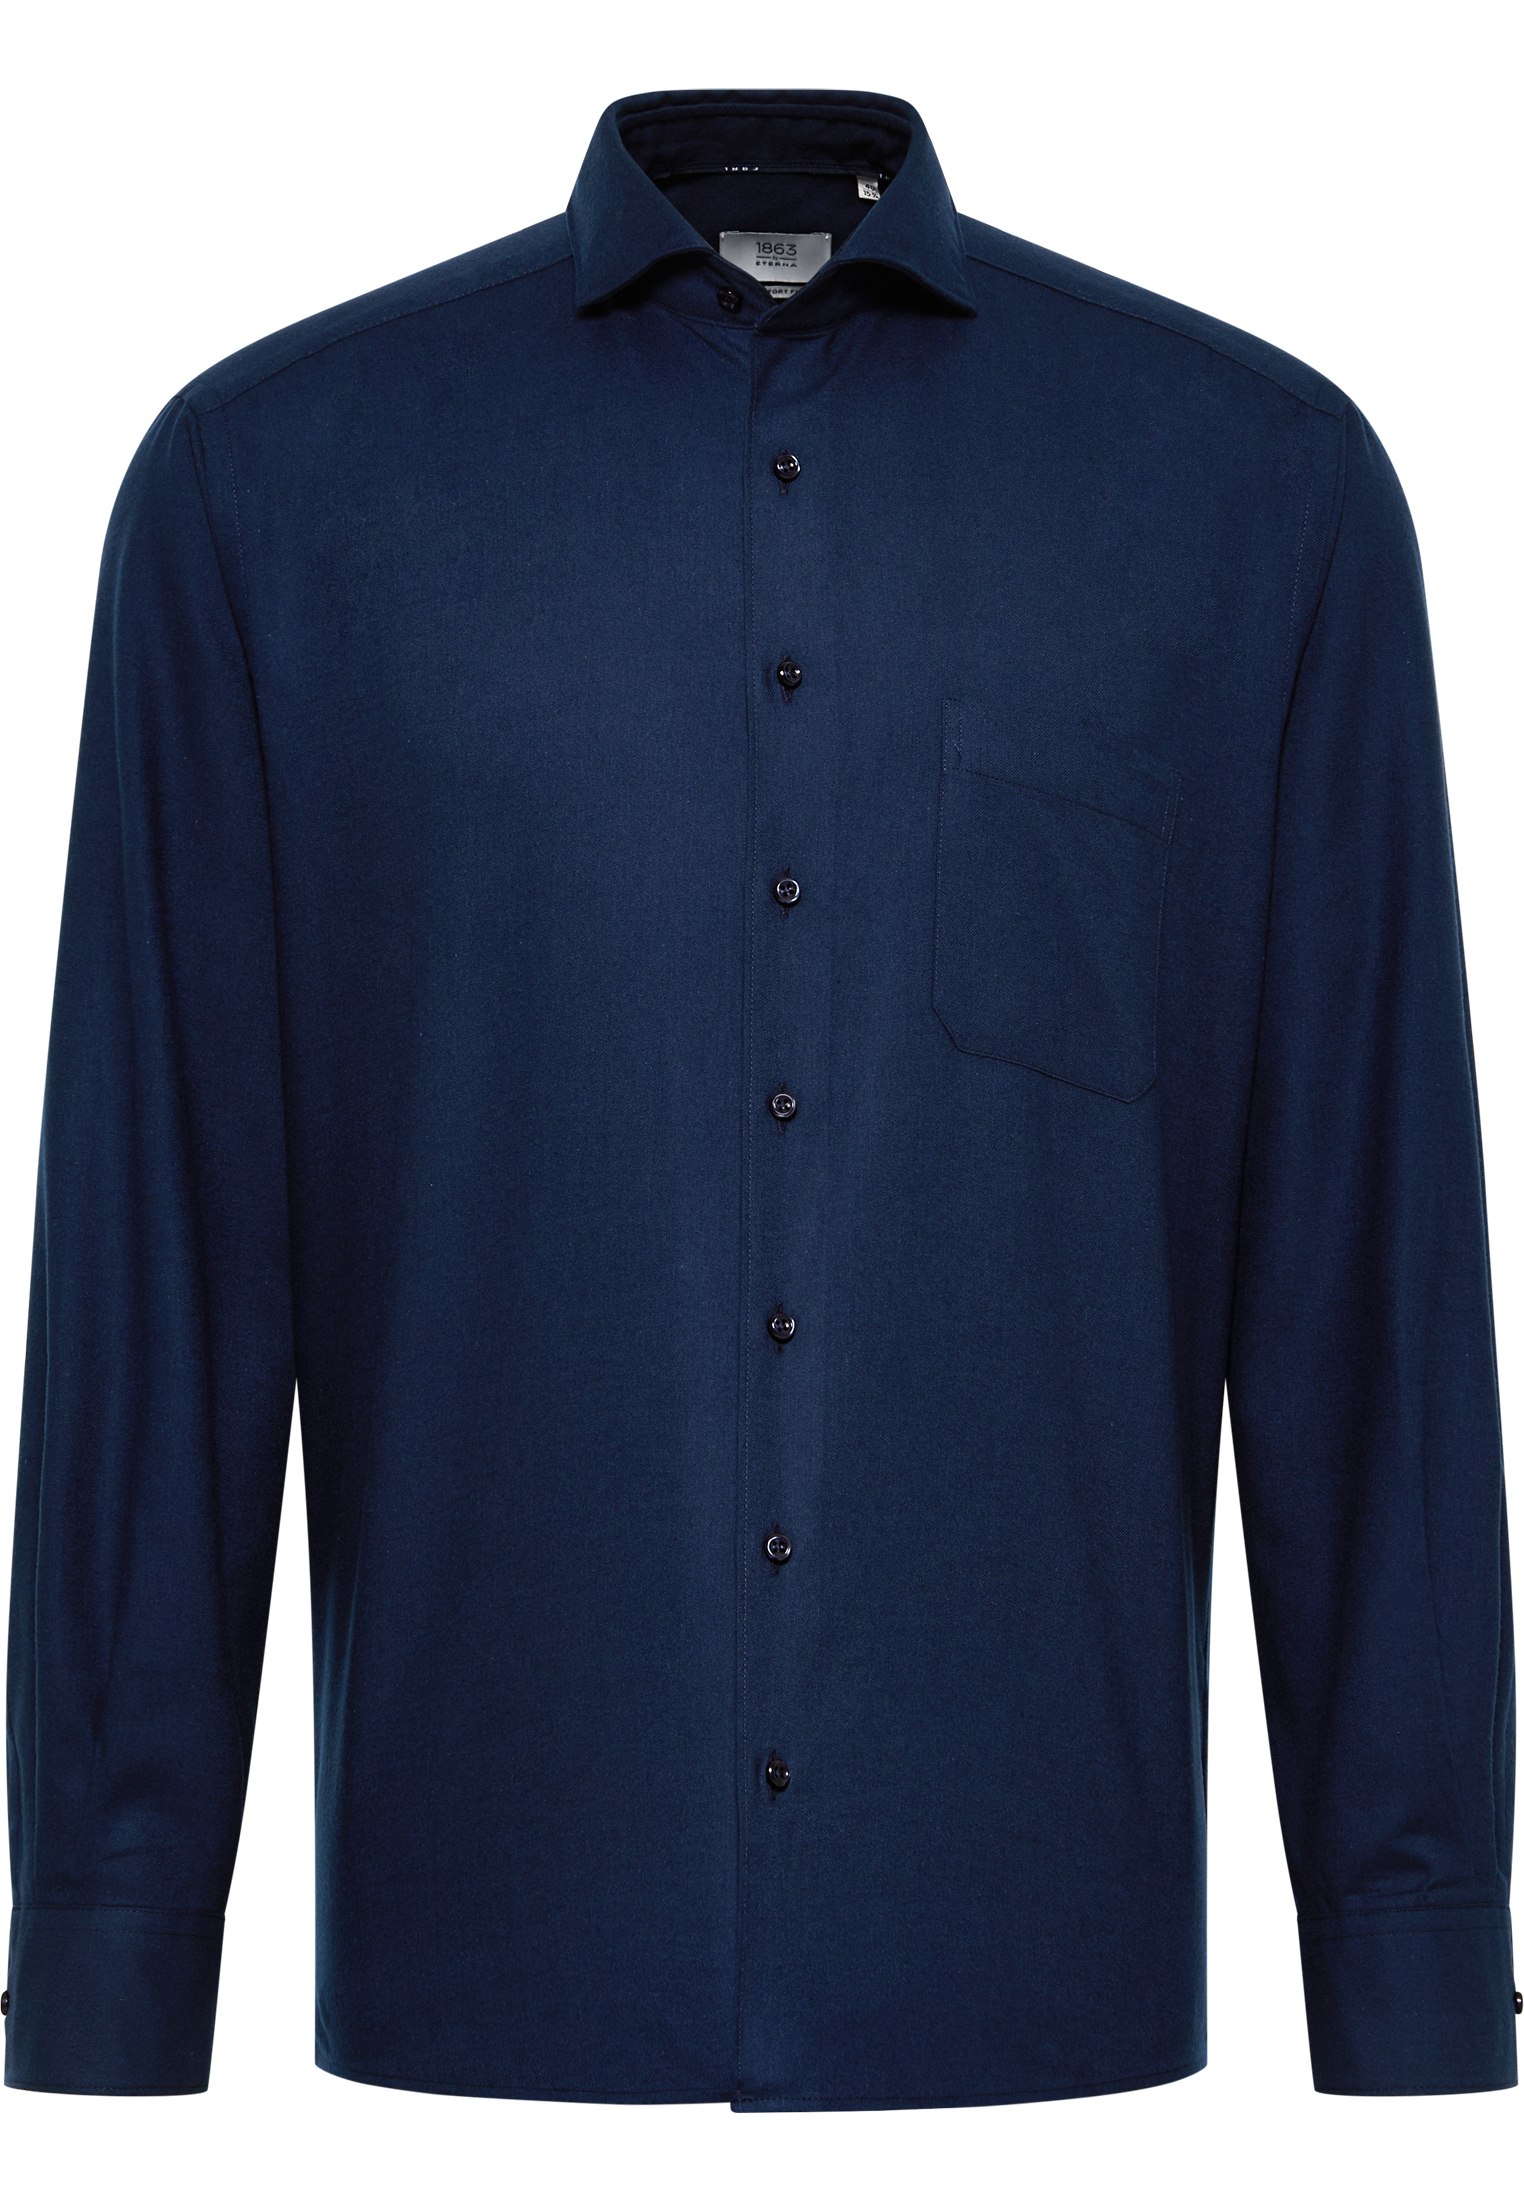 COMFORT FIT Shirt in dark blue plain